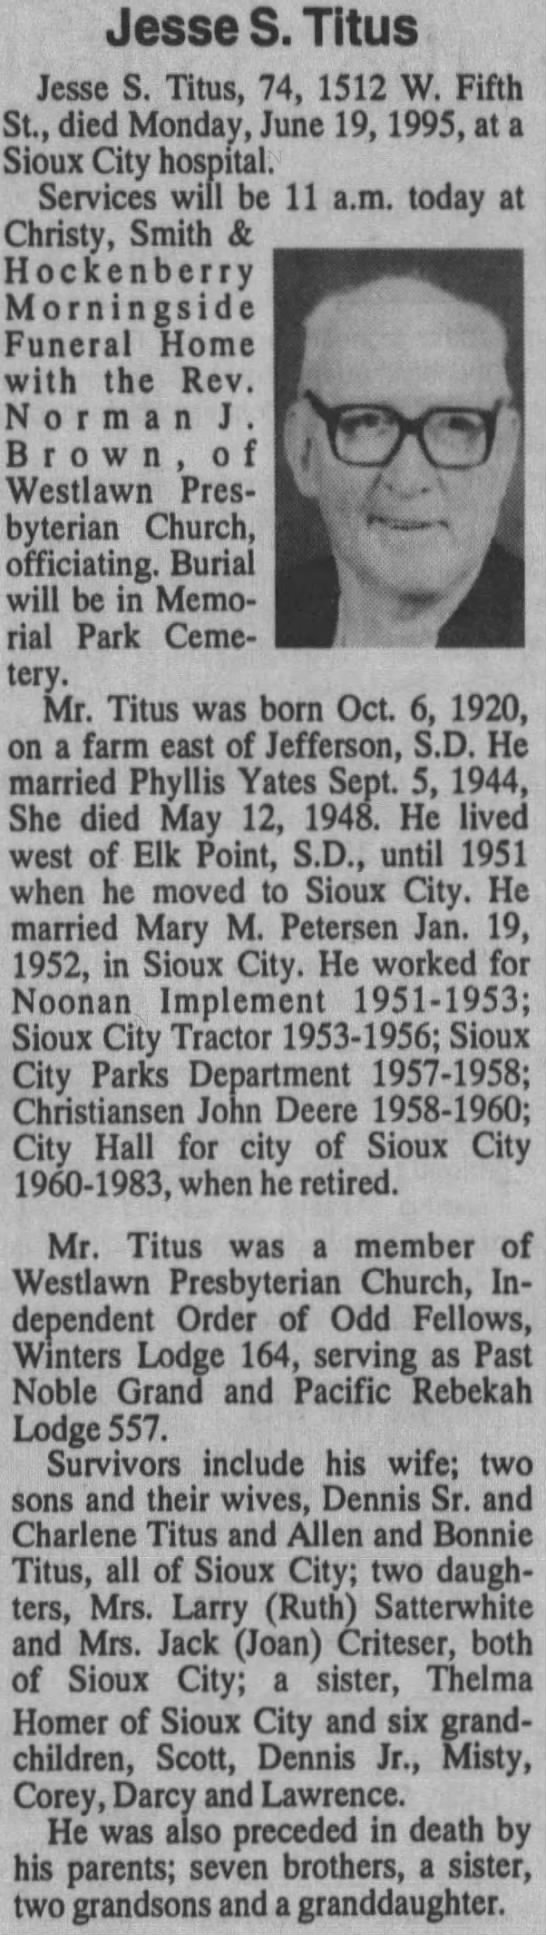 Obituary for Jesse S. Titus, 1920-1995 (Aged 74)